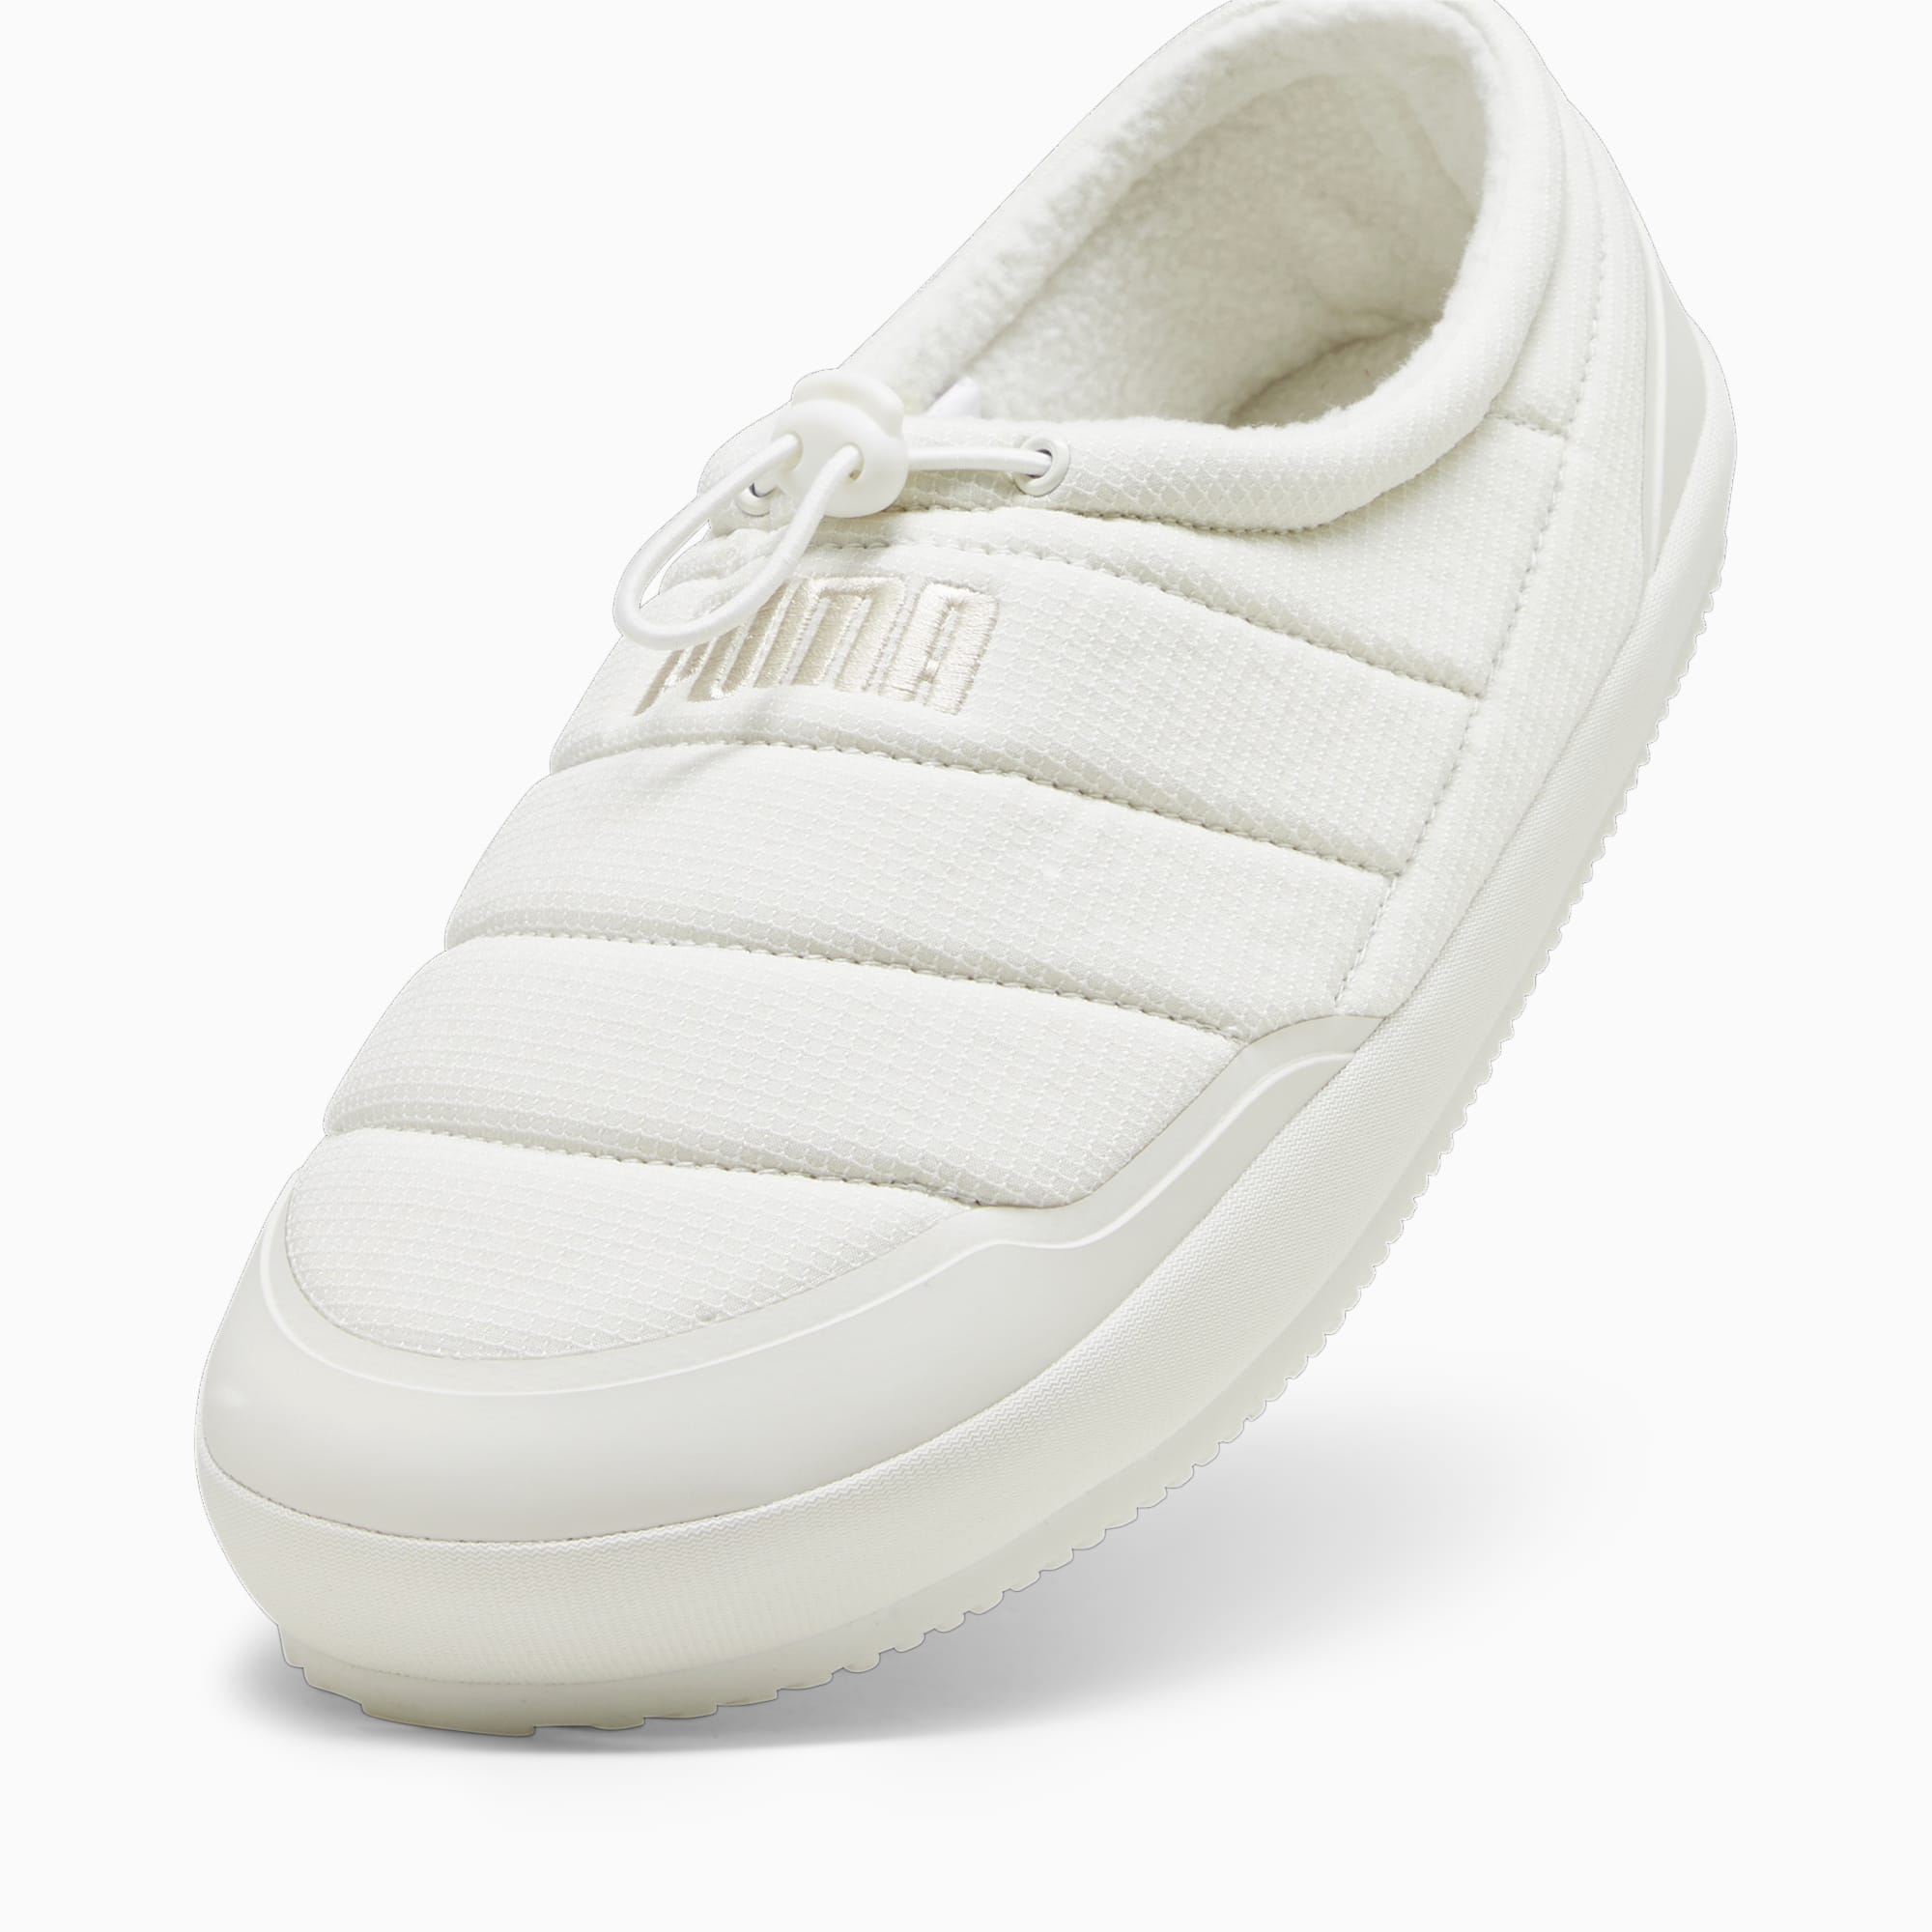 Pantofole Tuff Padded Plus, Bianco/Altro